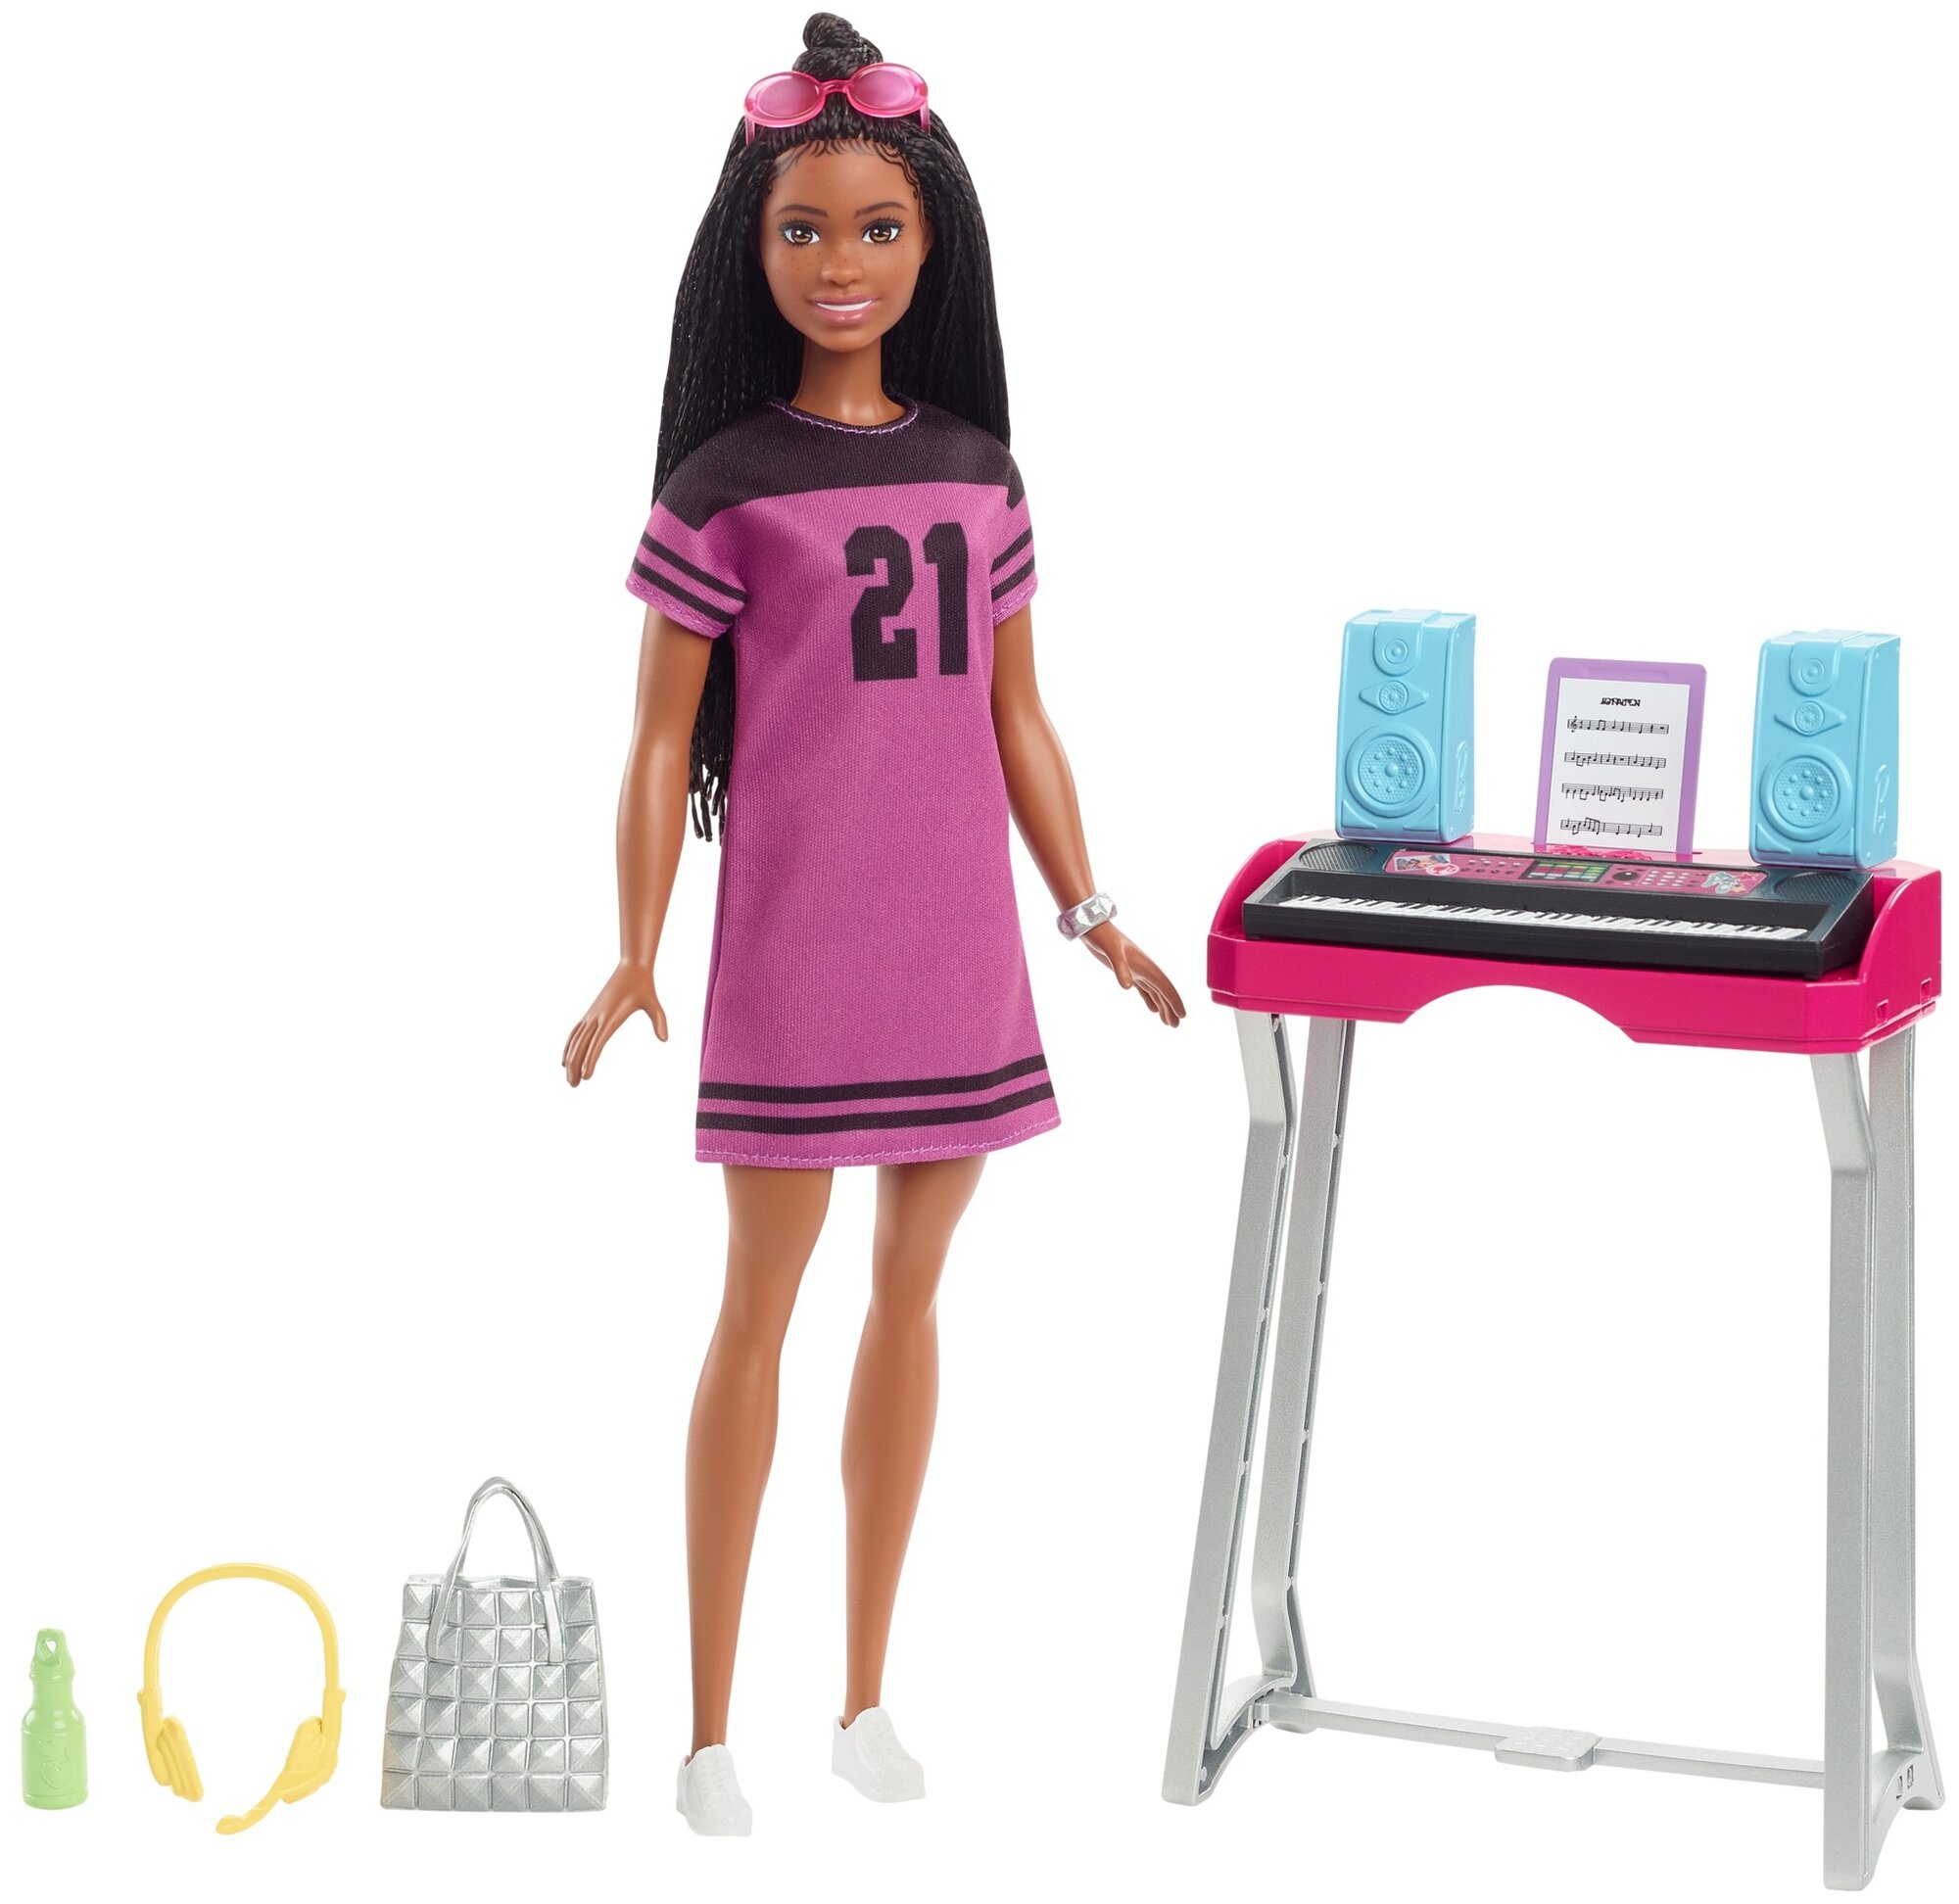 Barbie Игровой набор "Бруклин" с аксессуарами - фото №1